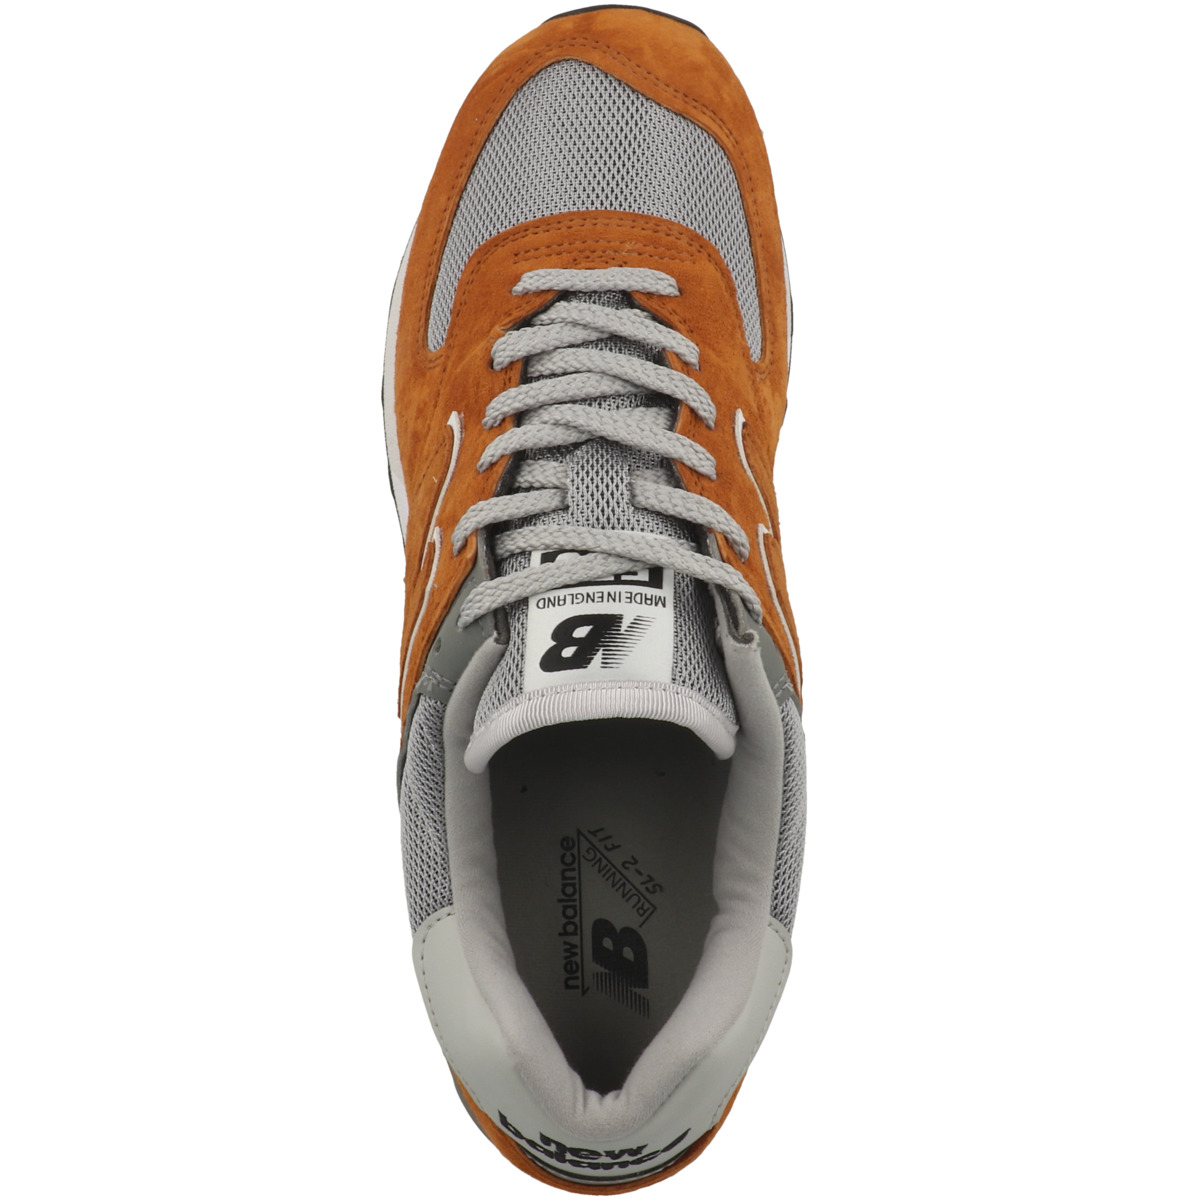 New Balance OU 576 OOK Made in UK Sneaker low orange